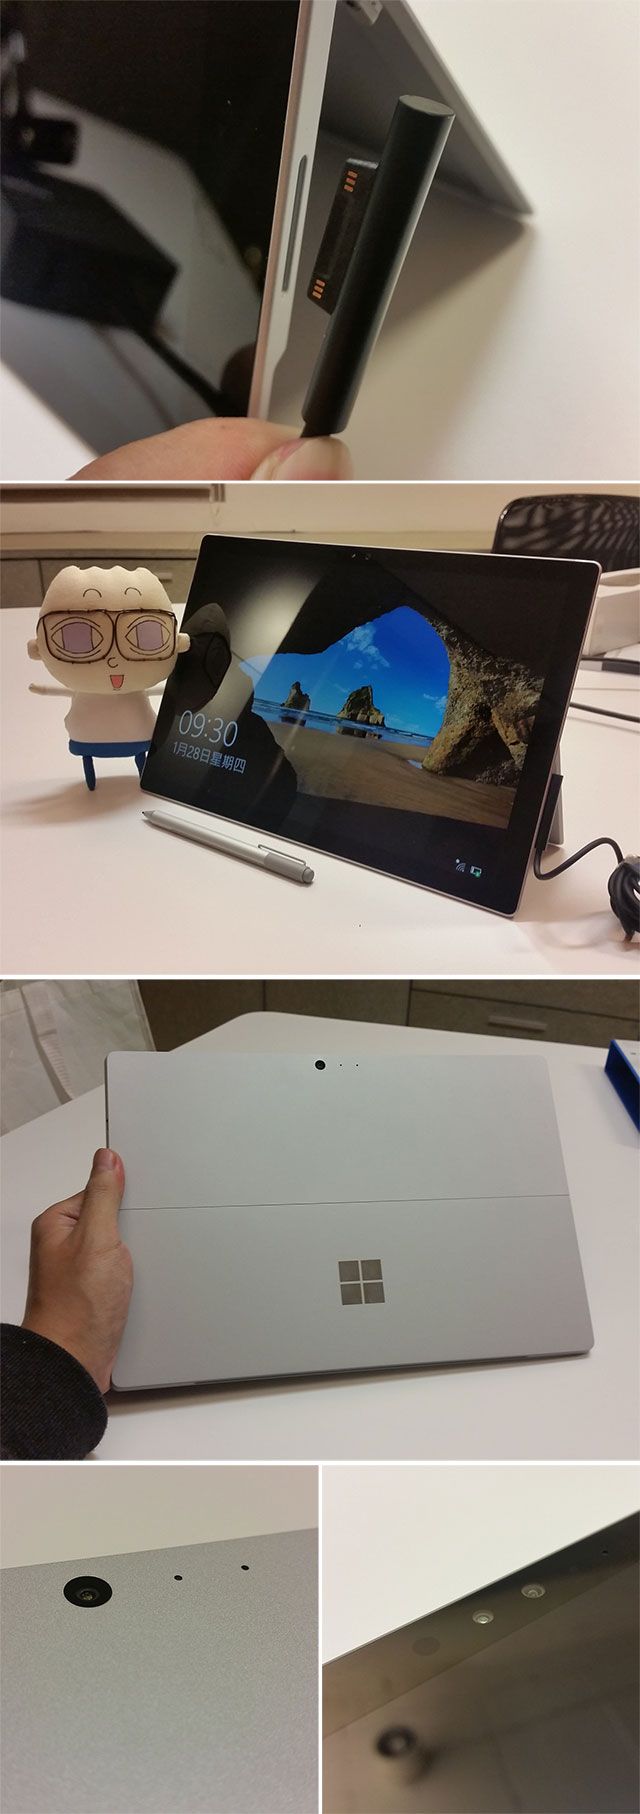 3C SurfacePro4 平板 筆電 Microsoft 微軟 手寫筆 就當人2吧 人2出書 徵女友 人2 人2的插画星球 People2